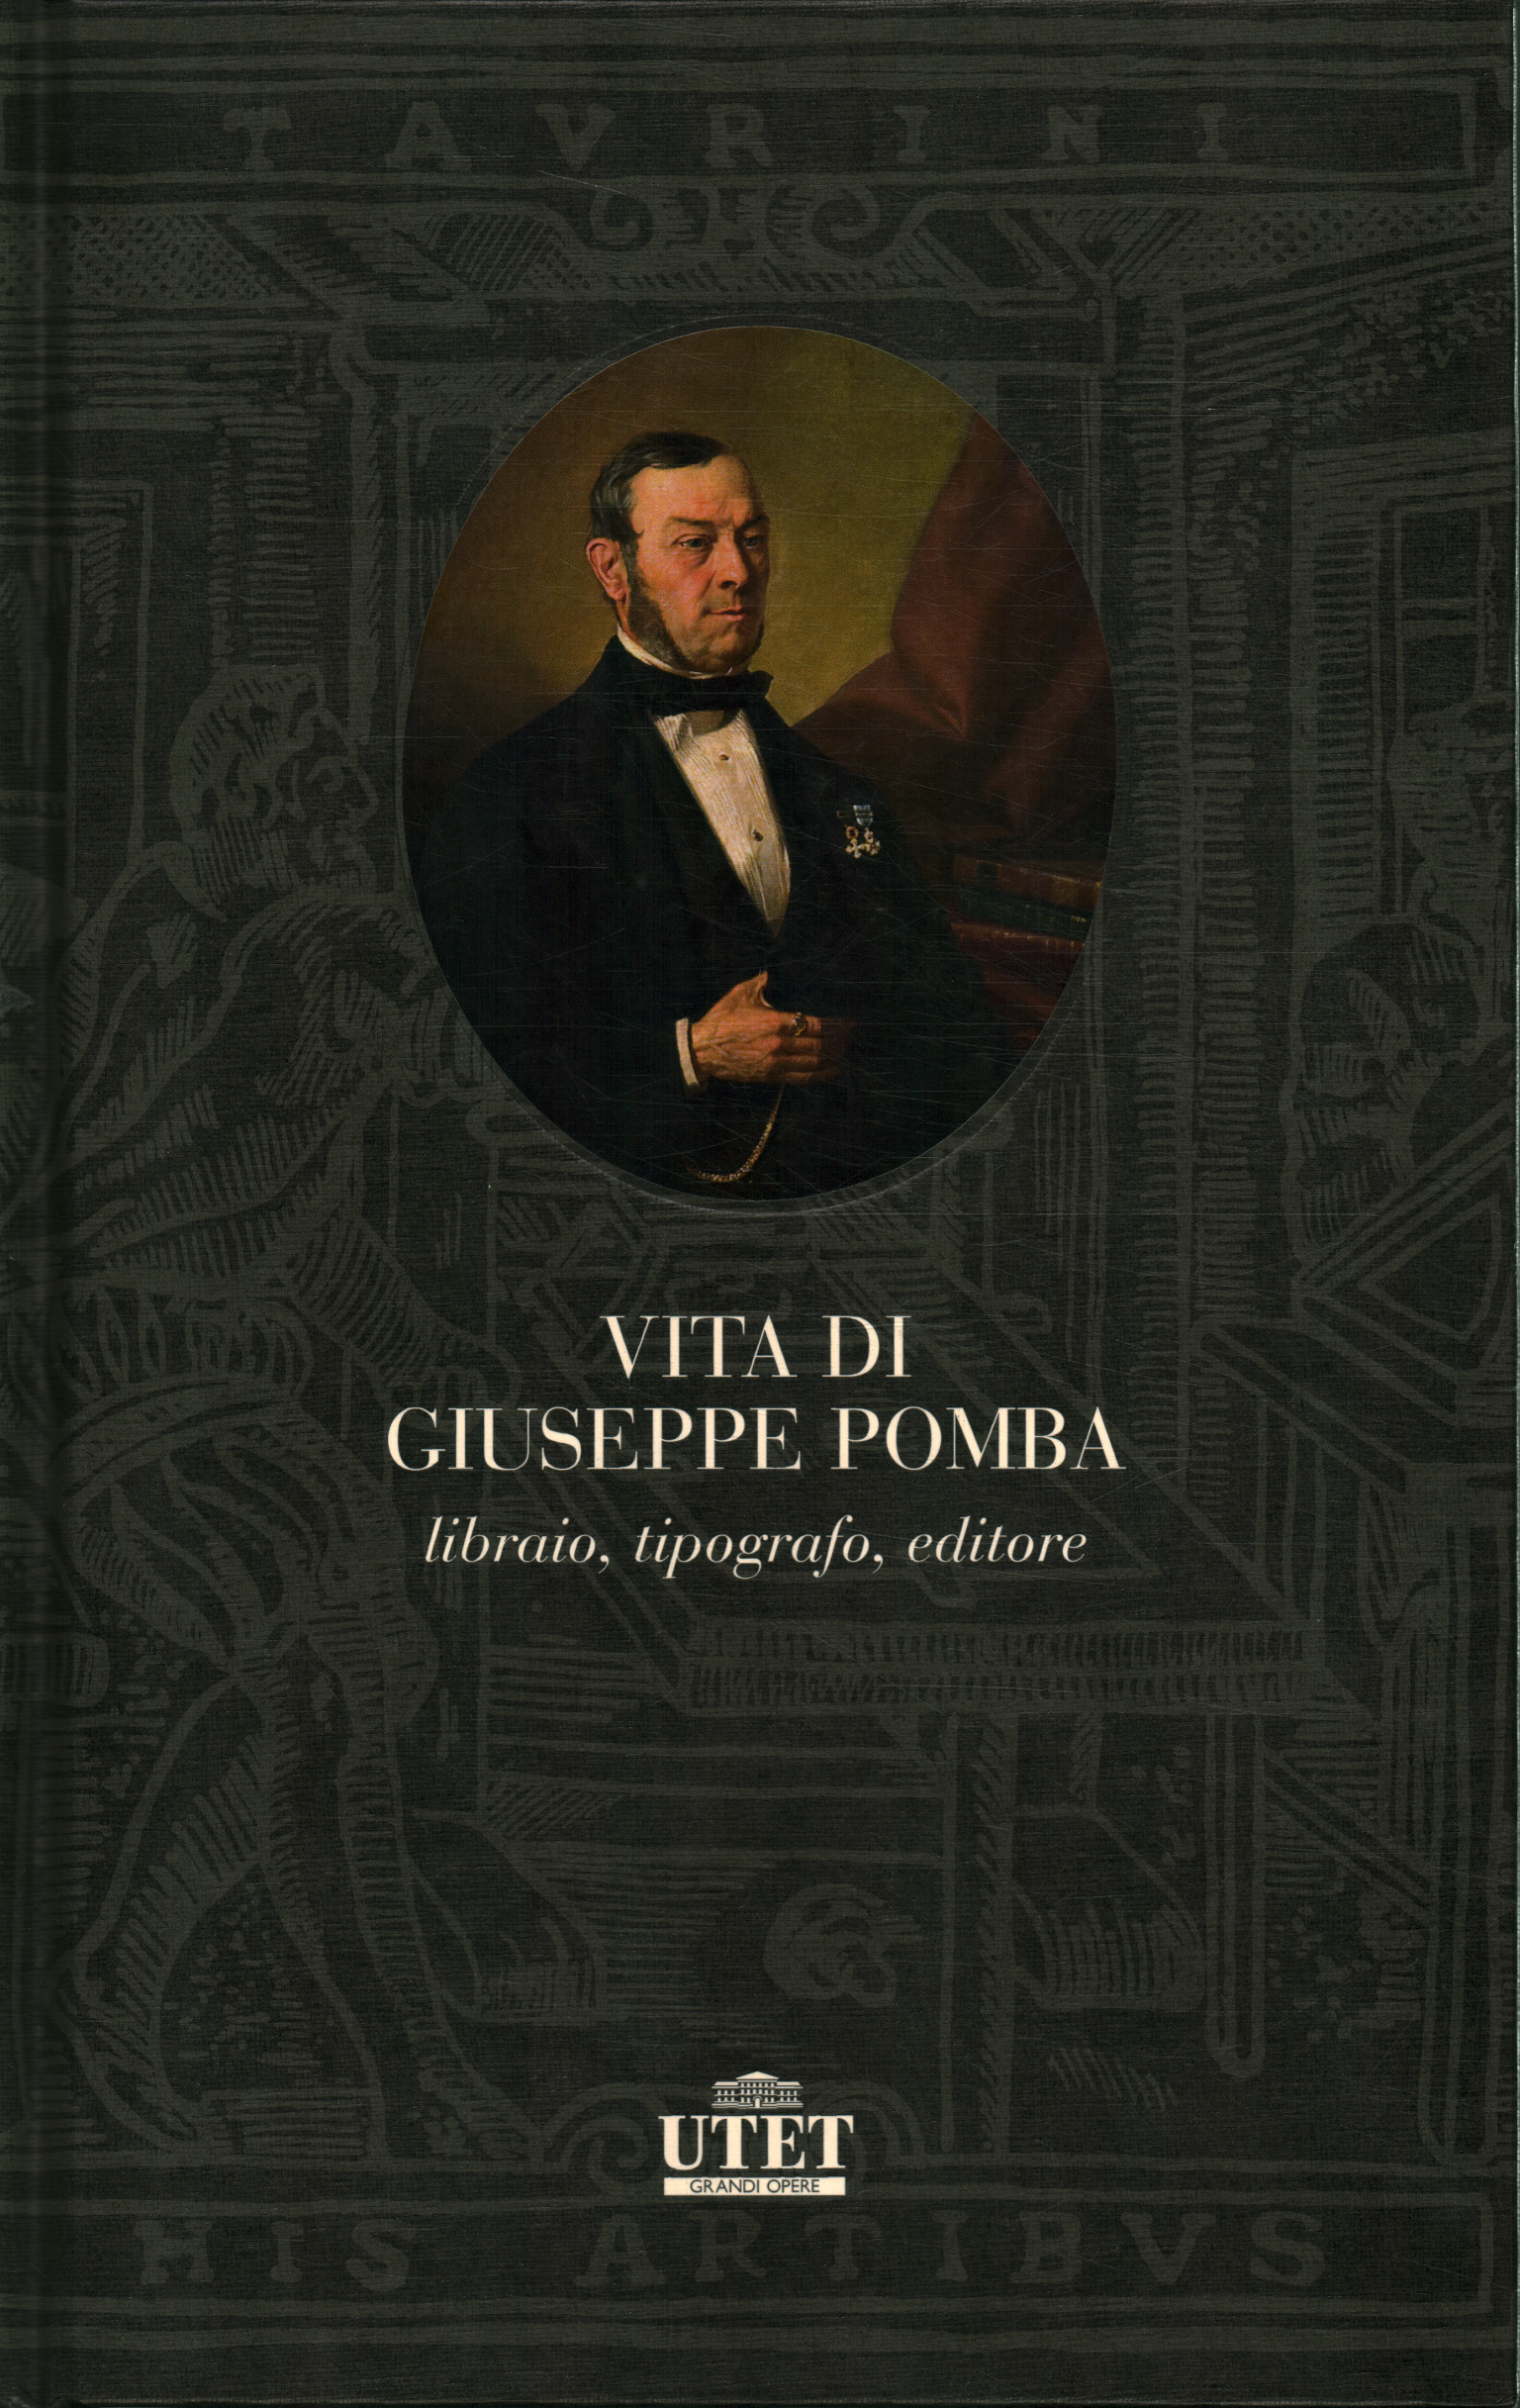 Life of Giuseppe Pomba